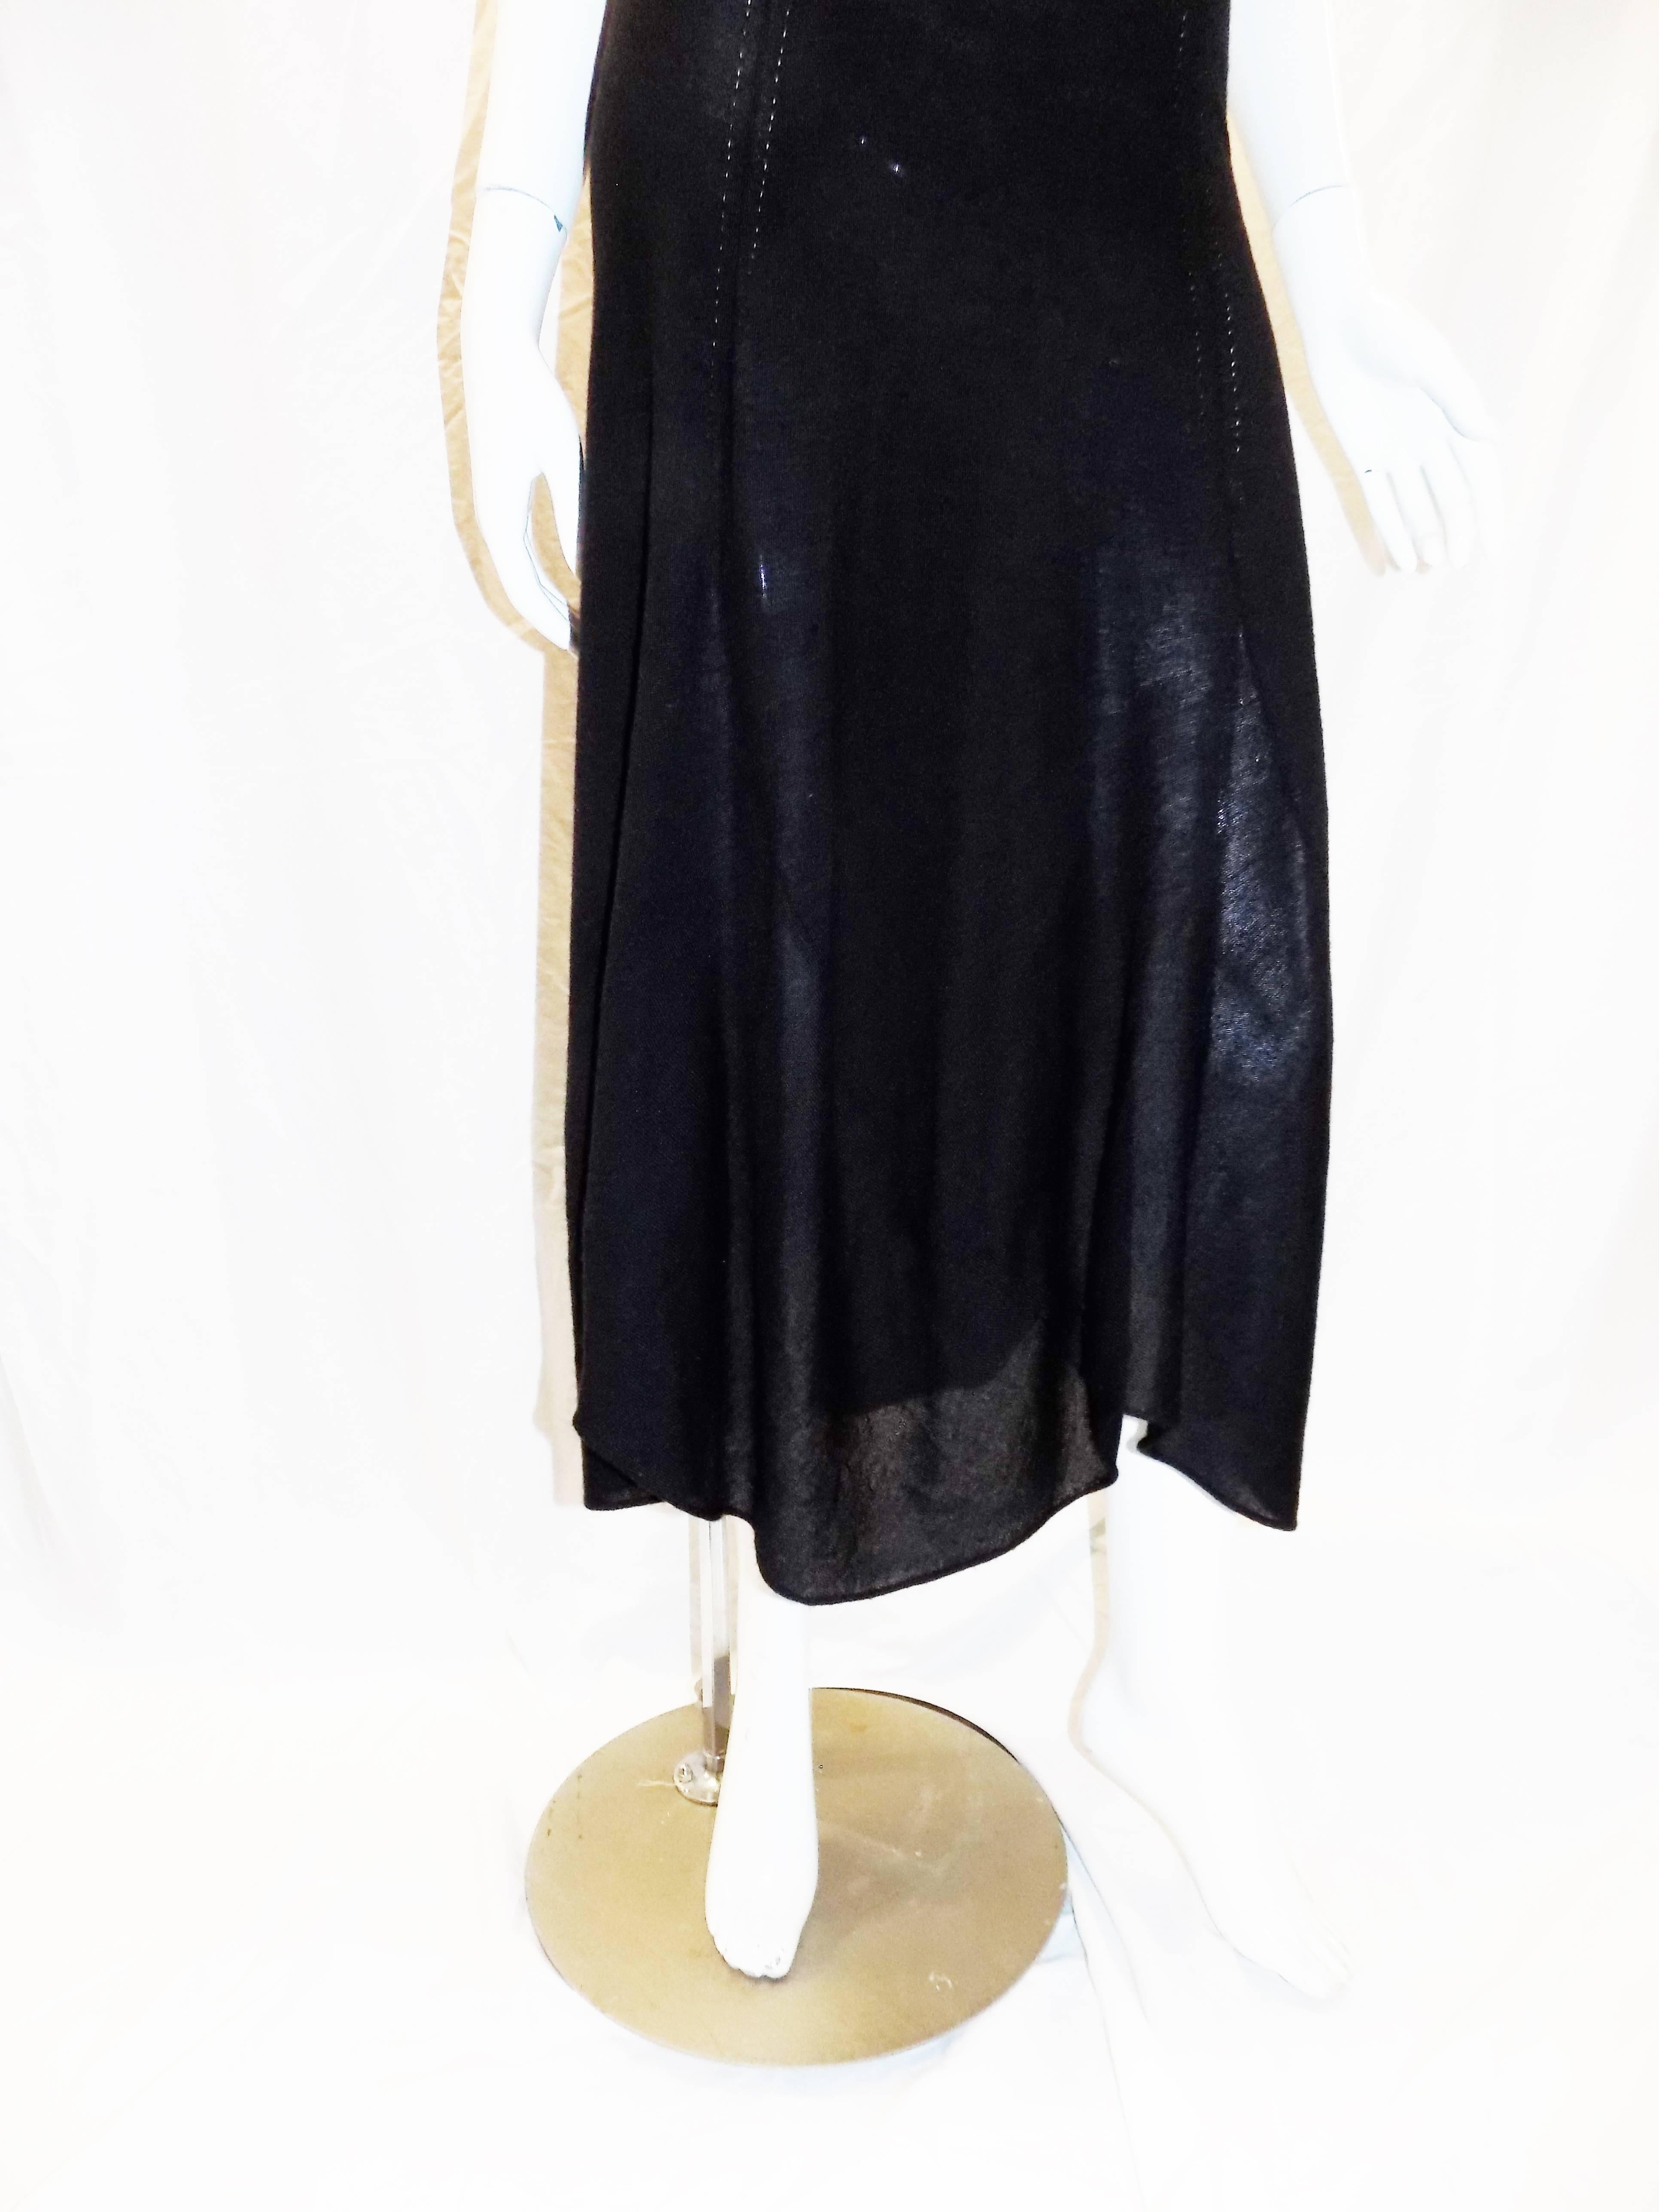 Black  Yves Saint Laurent Cashmere and silk strapless maxi dress / skirt, 2010